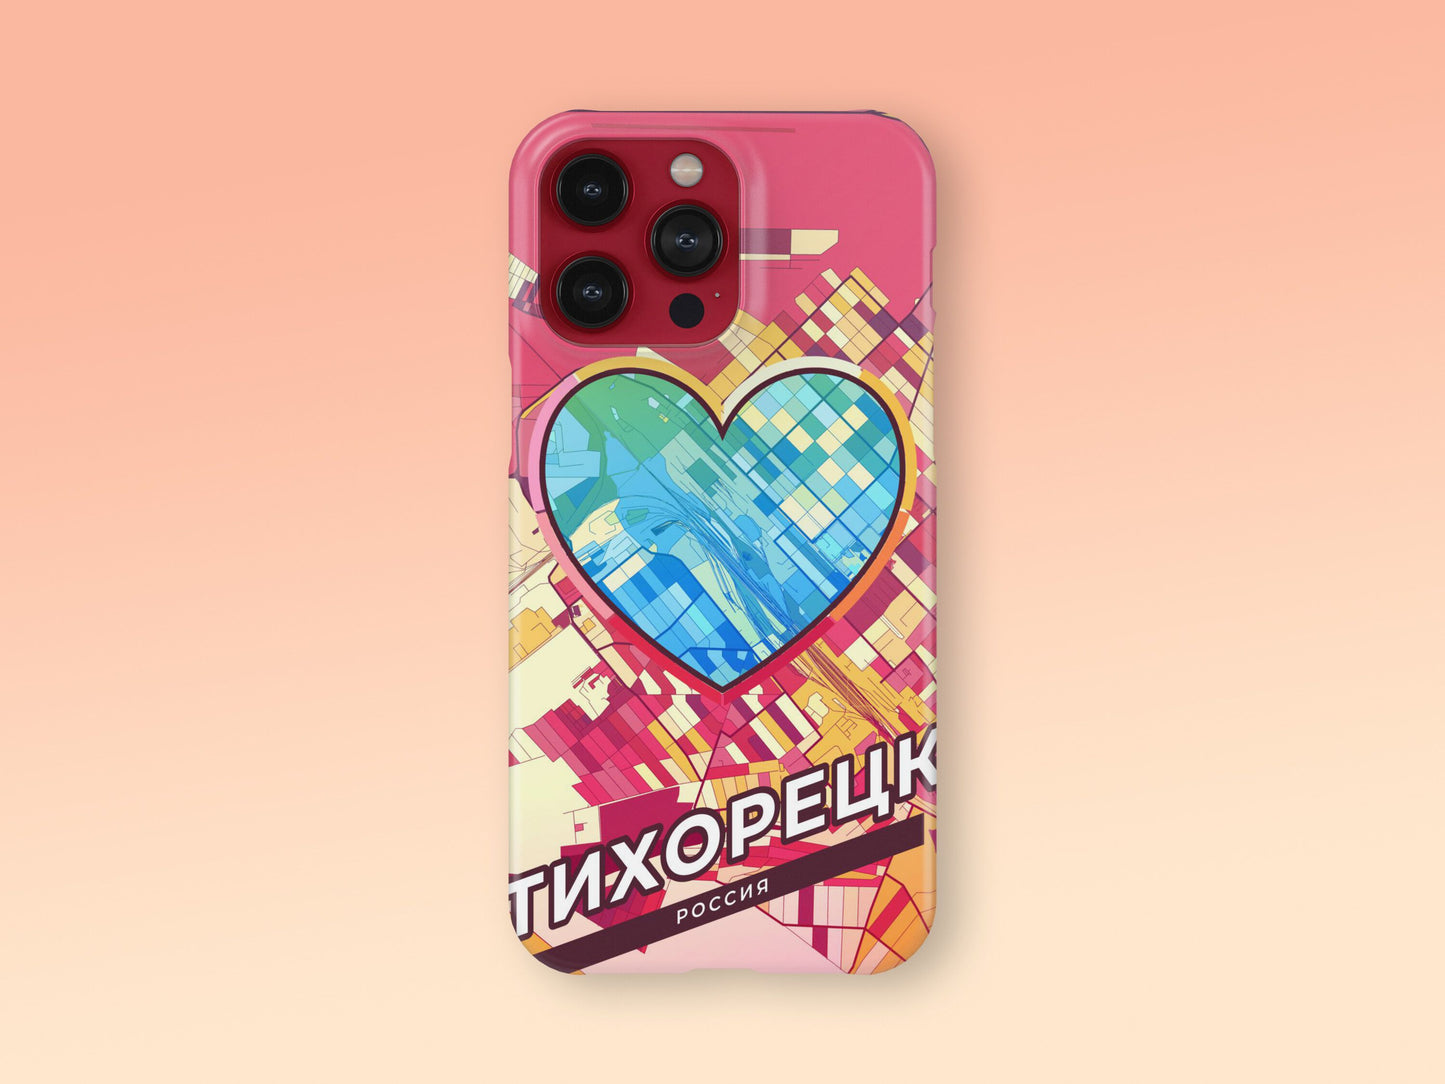 Tikhoretsk Russia slim phone case with colorful icon 2